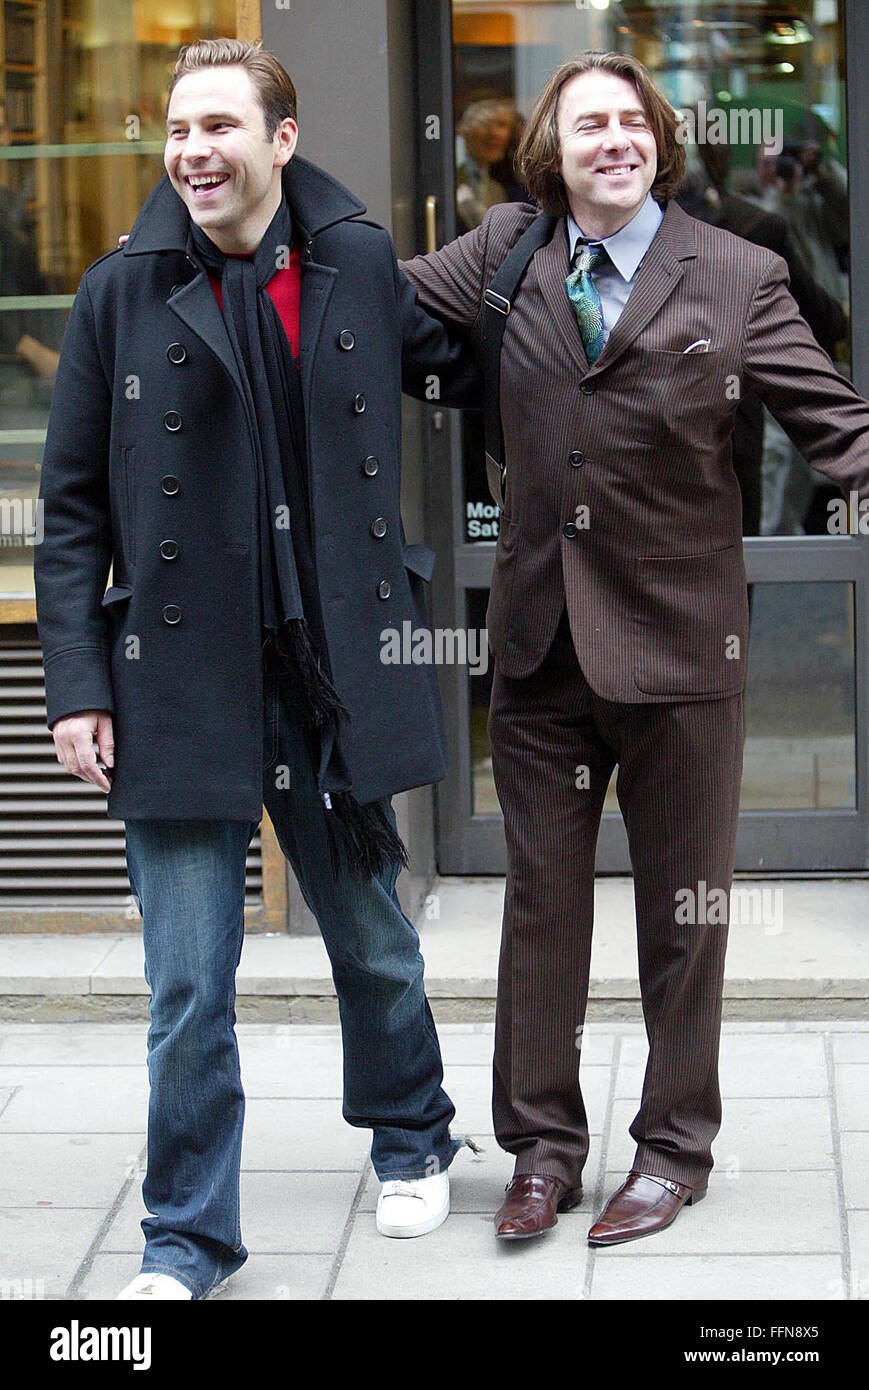 David Walliams und Jonathan Ross Beule ineinander in Savile Row, Schneiderei, 4 Bilder (Kredit Bild © Jack Ludlam) Mens 6pics Stockfoto